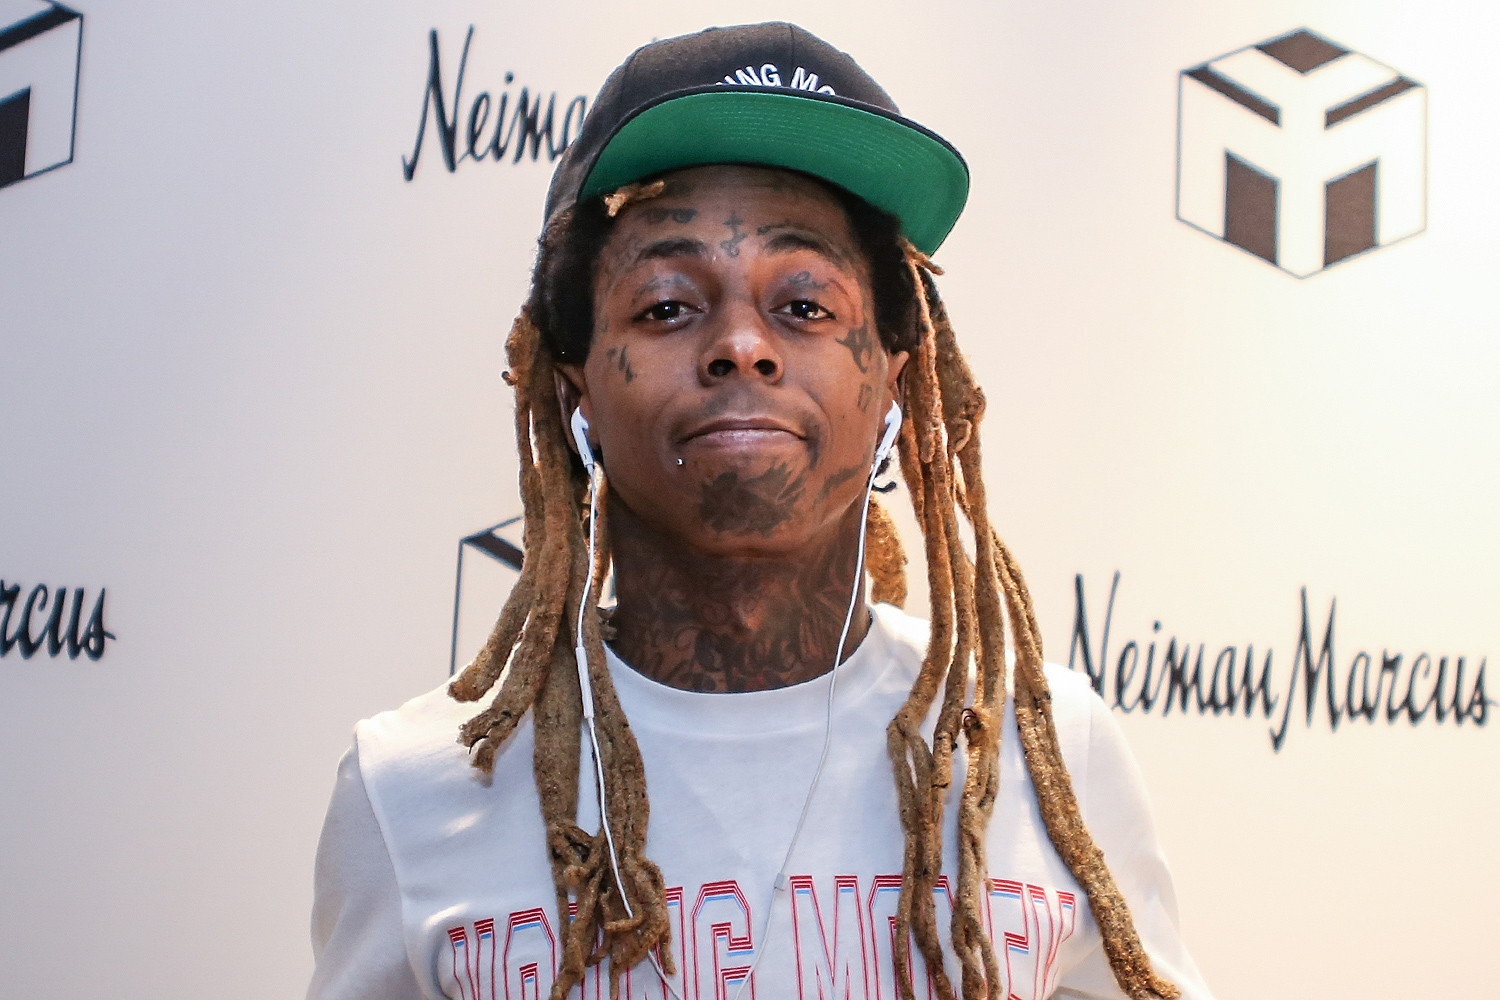 Lil Wayne sued by former bodyguard over alleged firearm threats